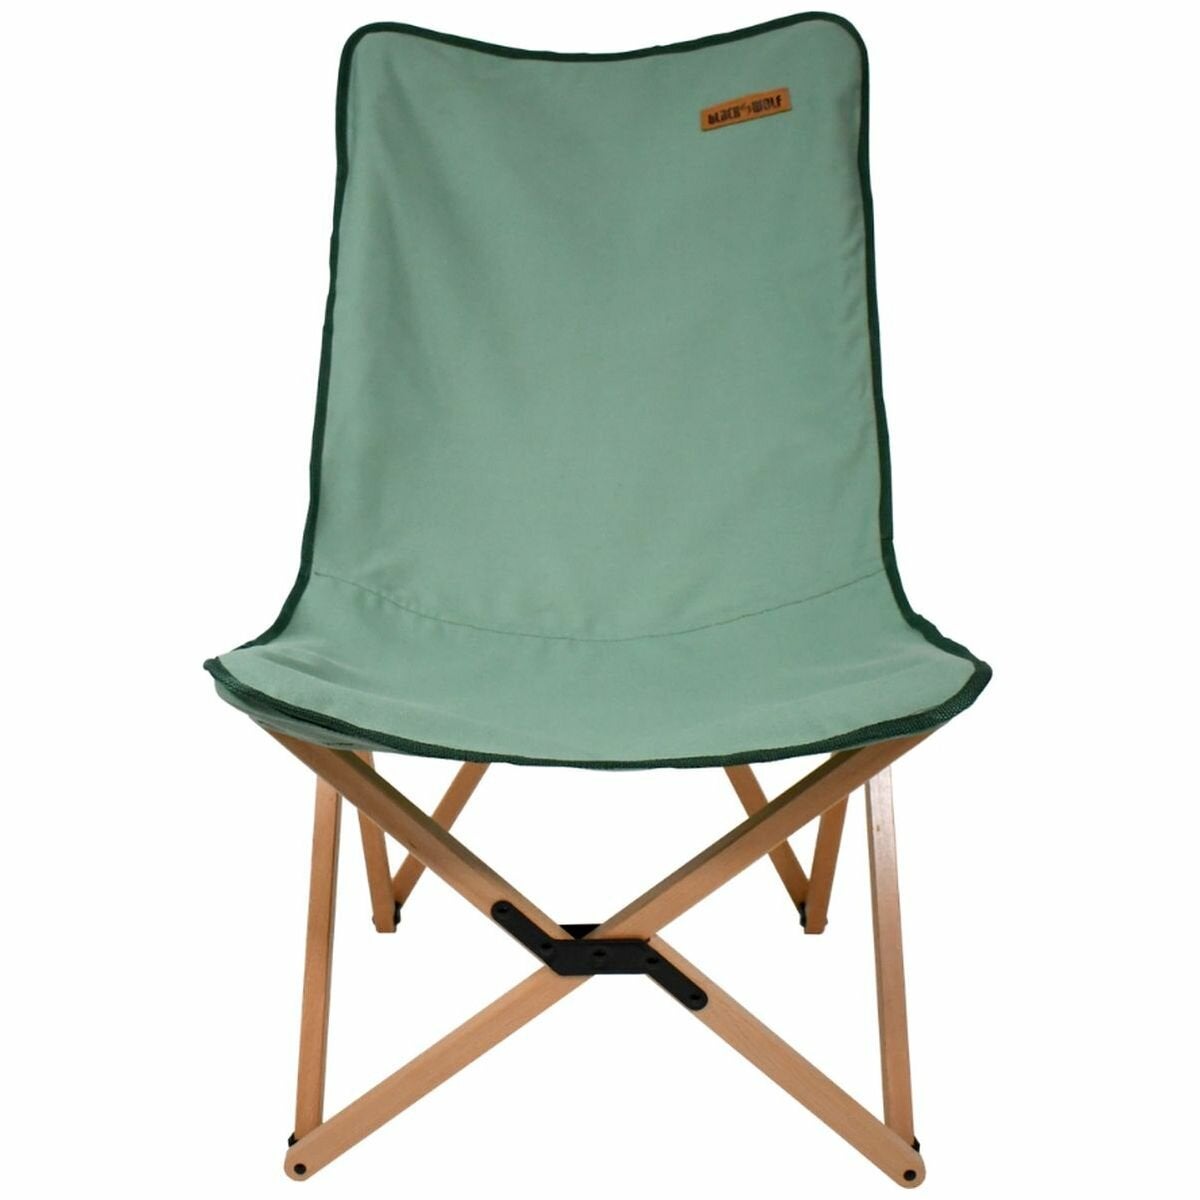 Image of BlackWolf Beech Chair Shale Green 32S001611581000